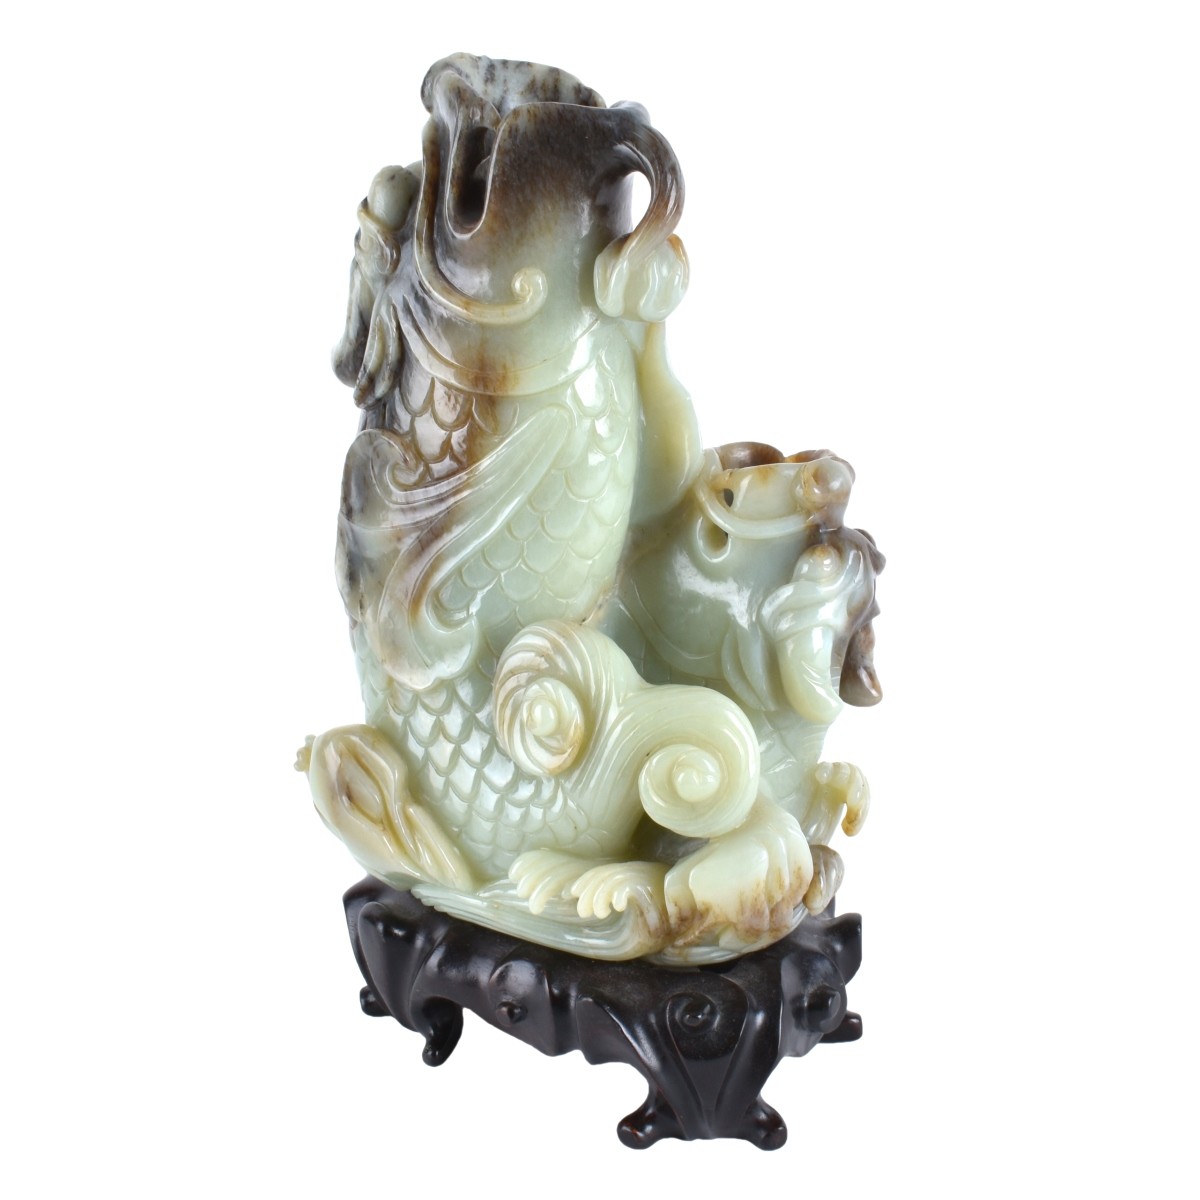 Chinese Jade Sculpture